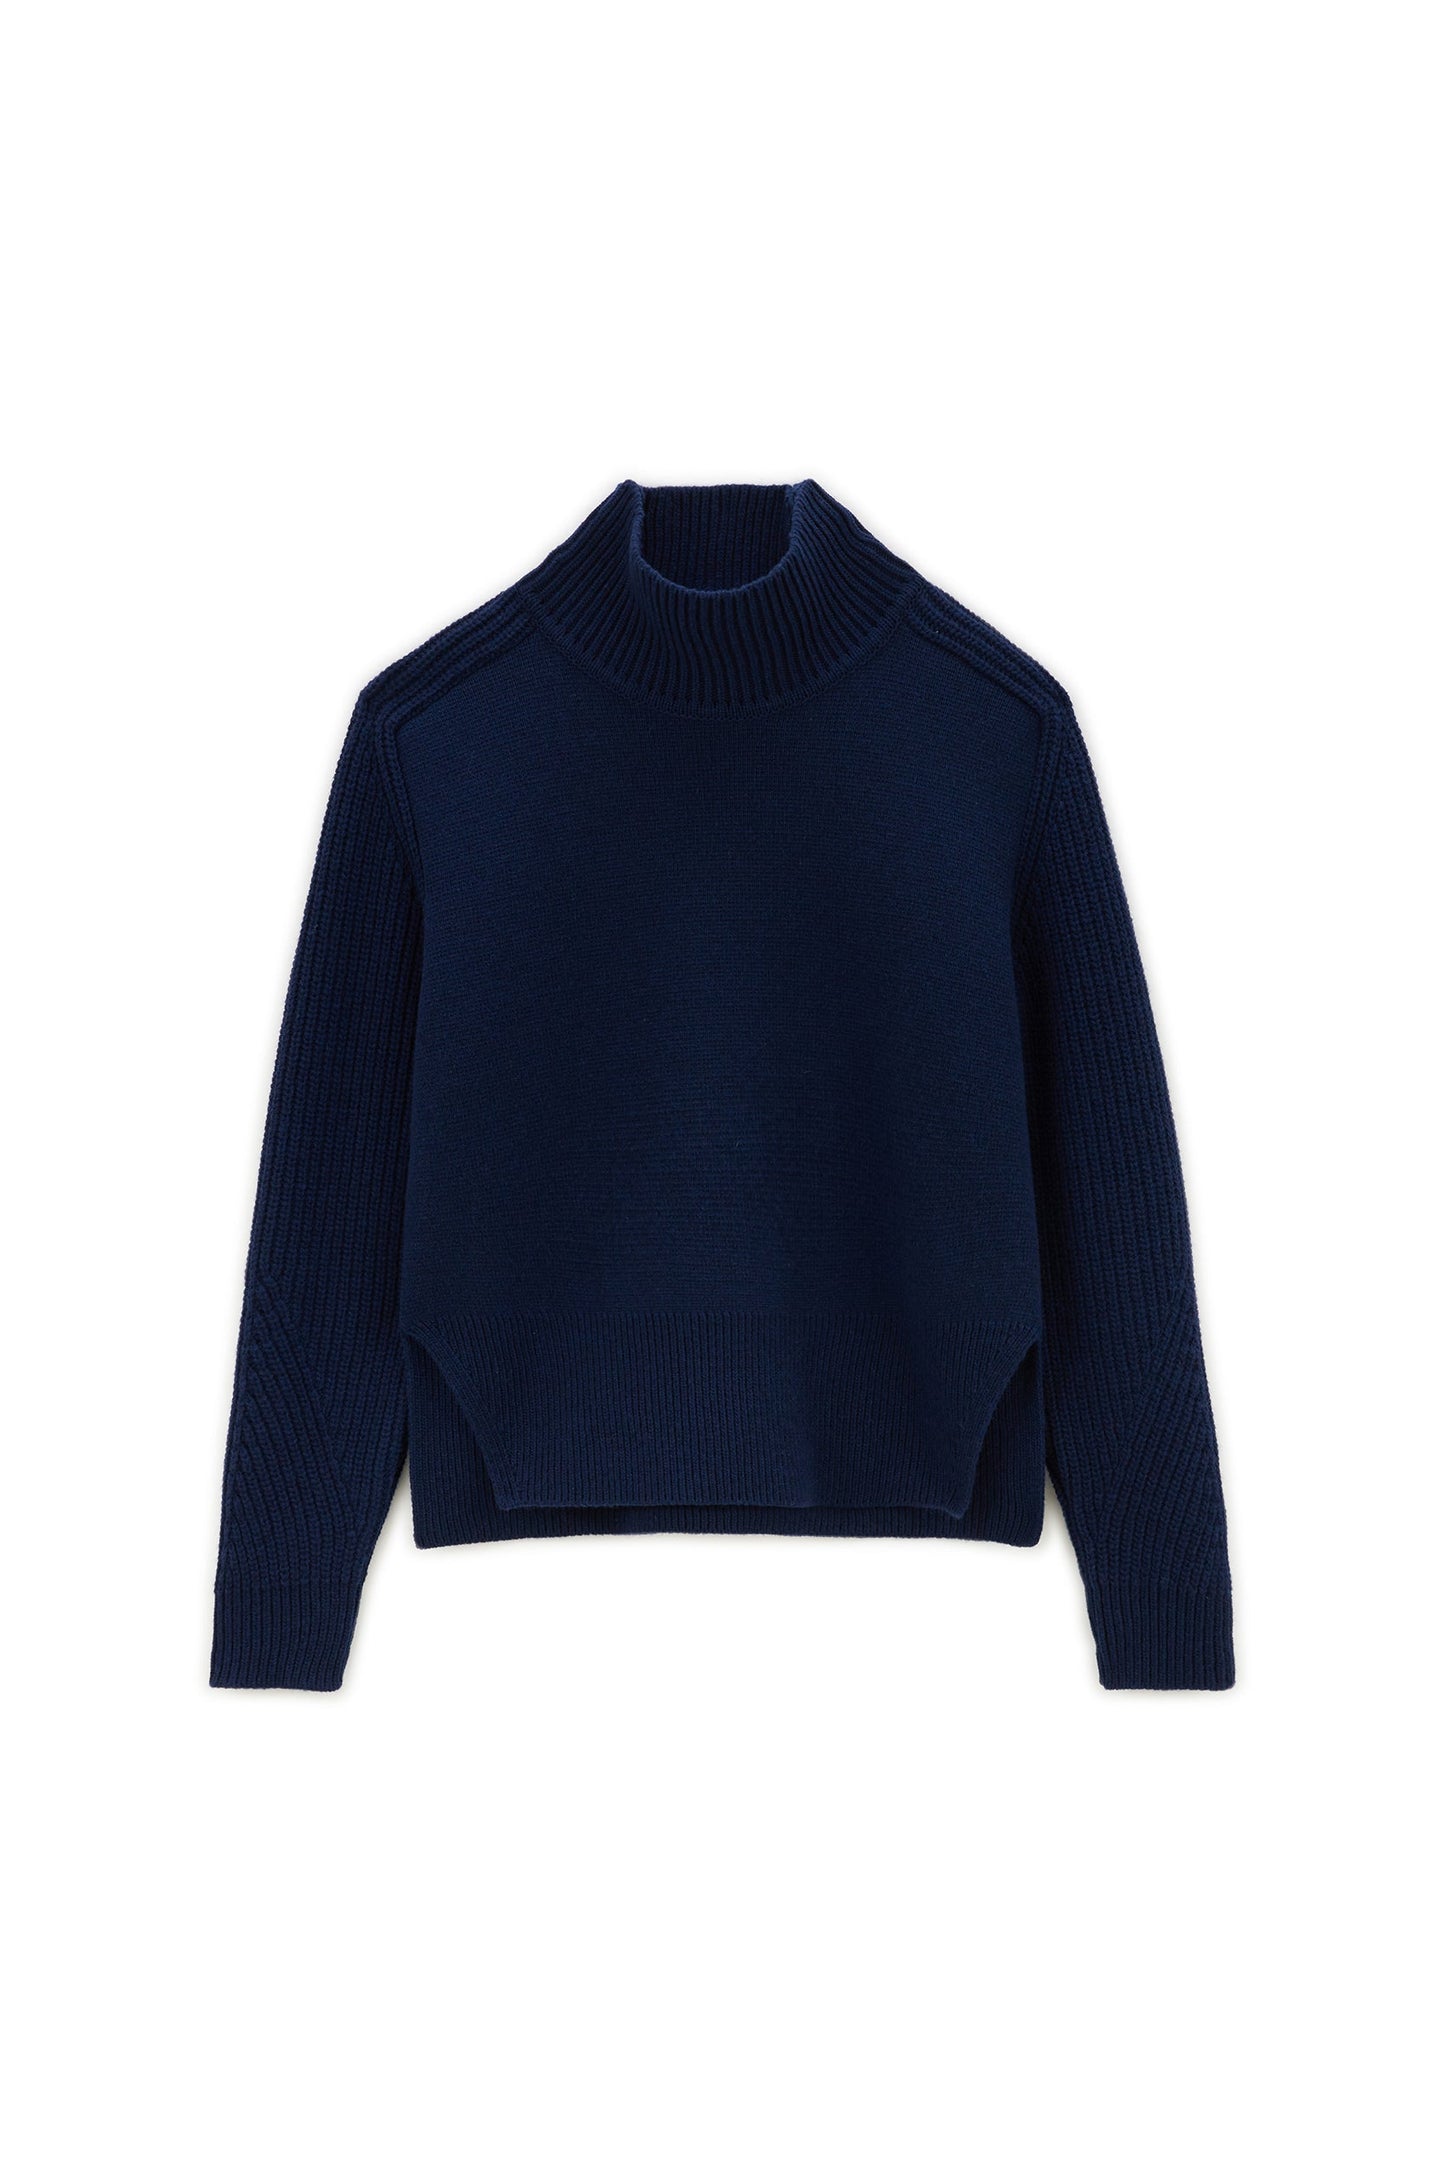 Maël navy blue sweater